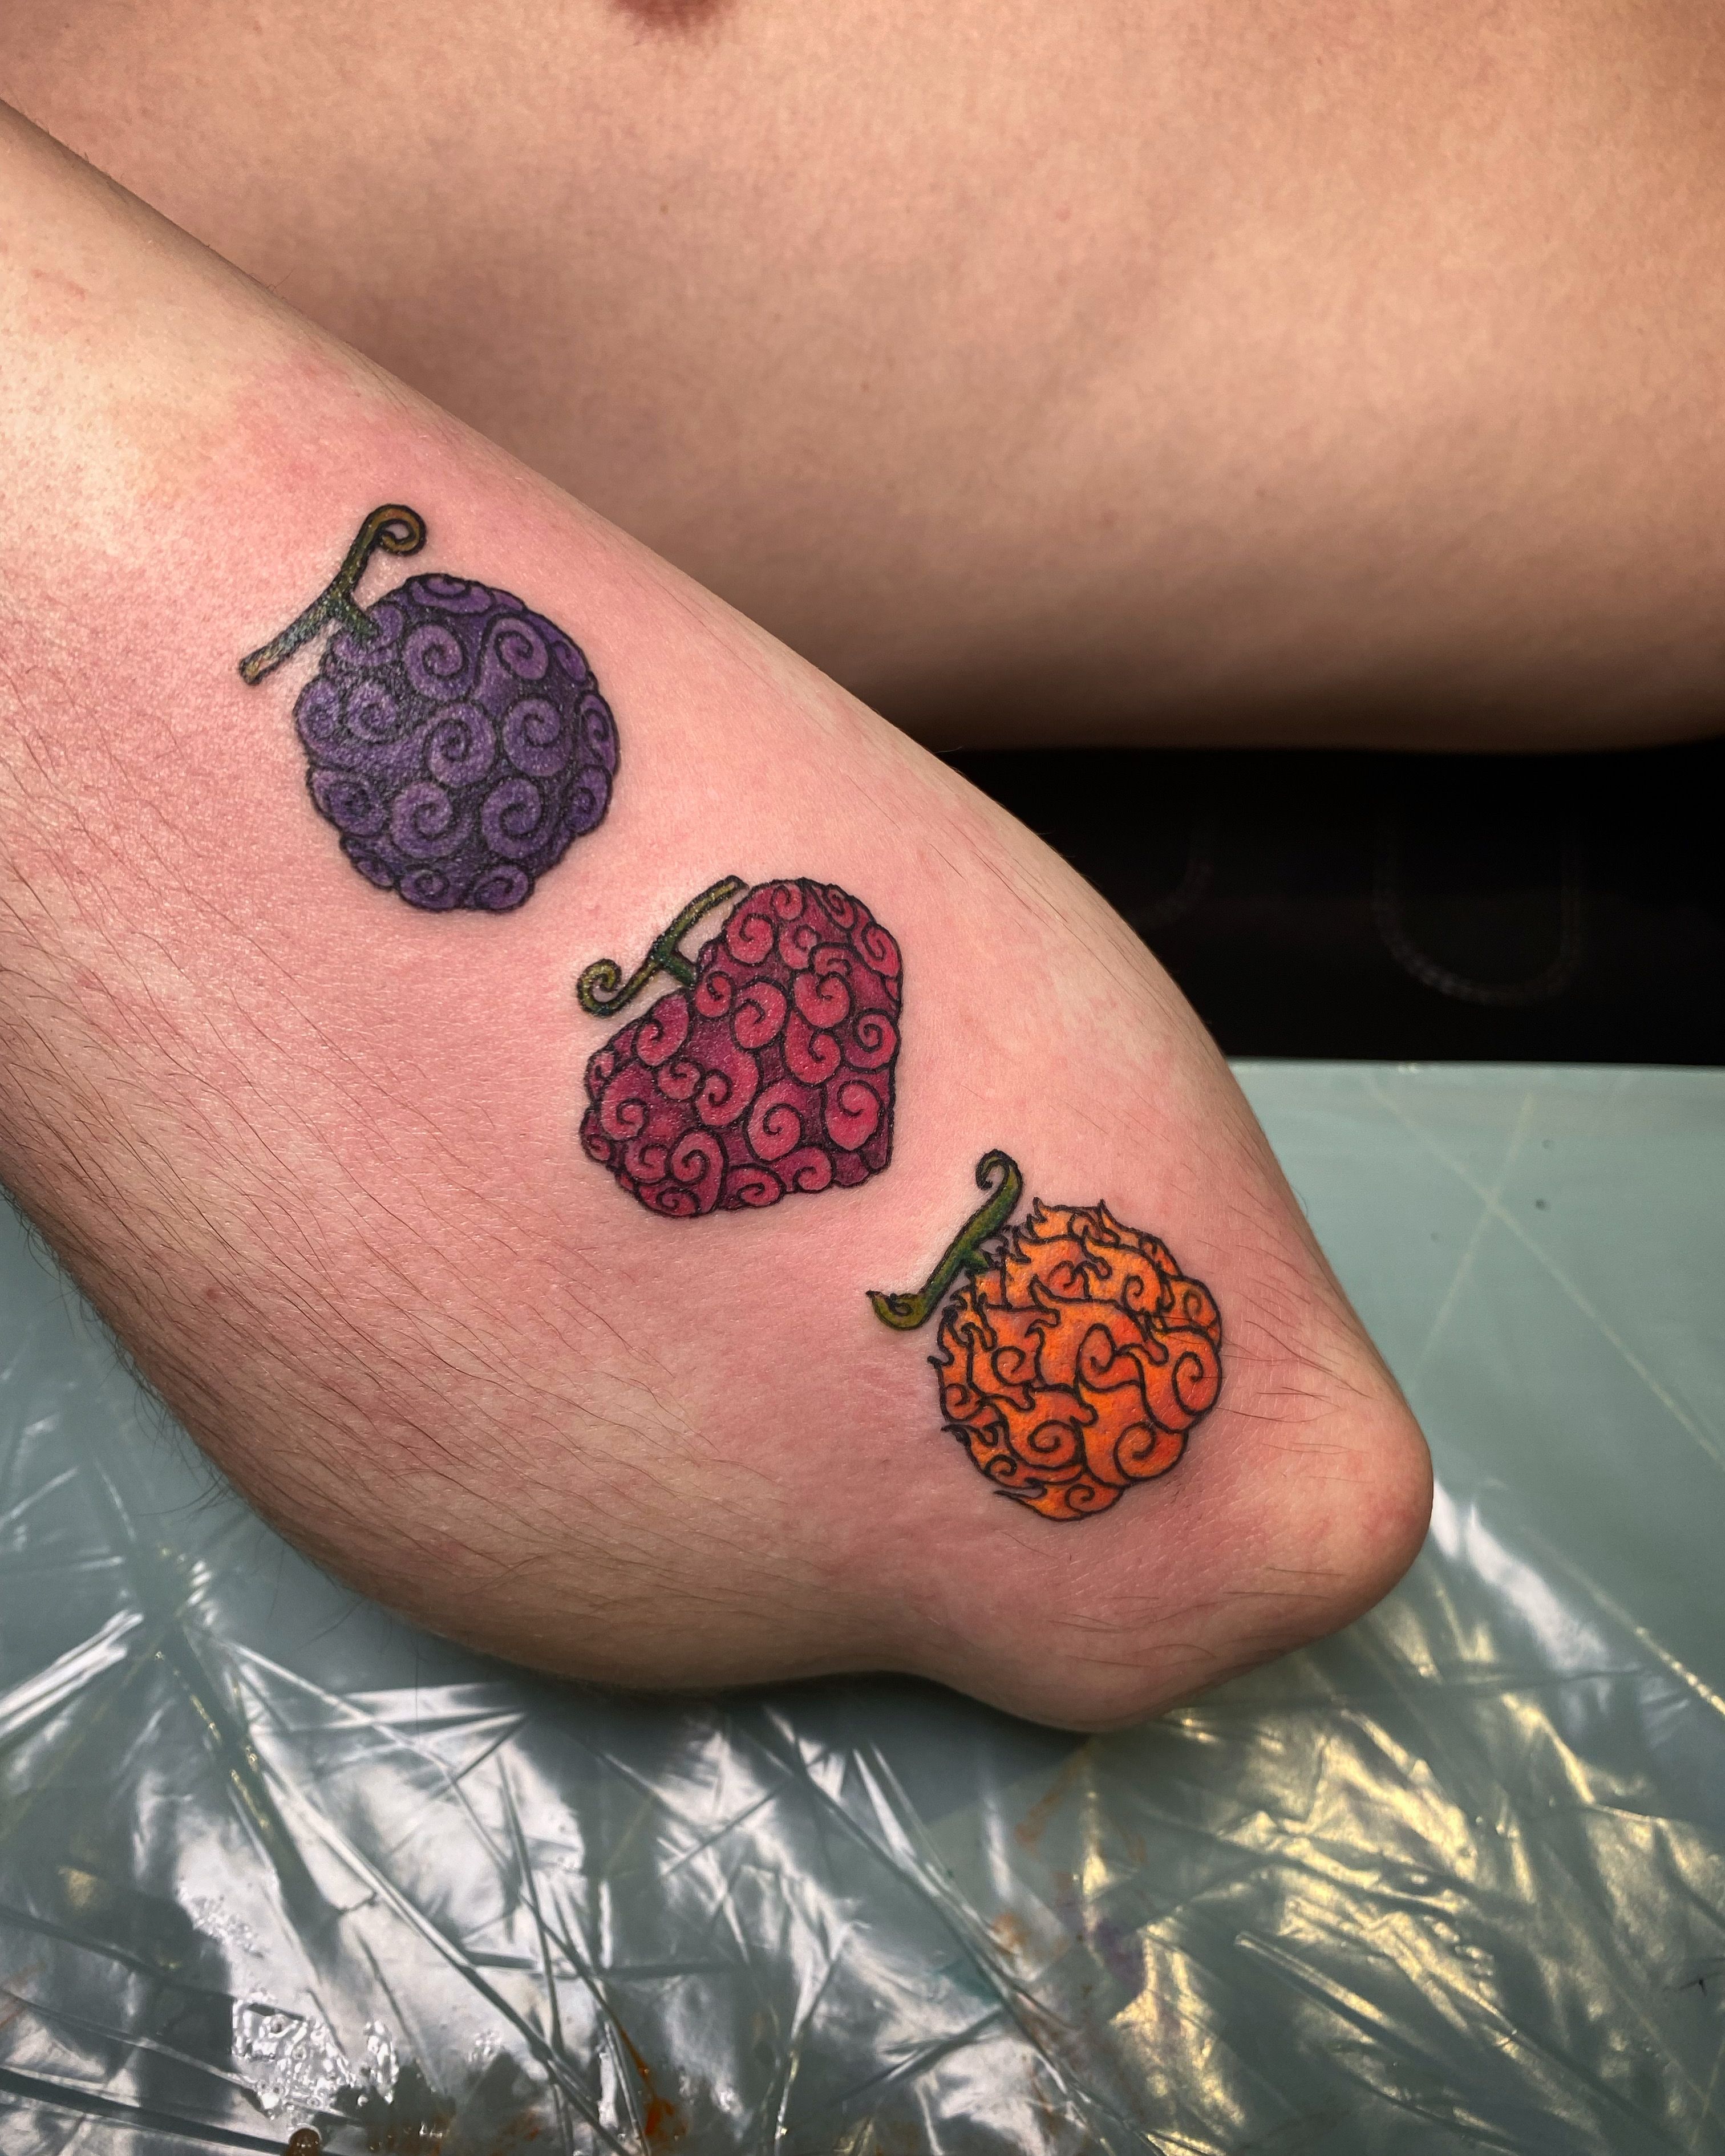 Kawaii style fruit tattoos on the calf.